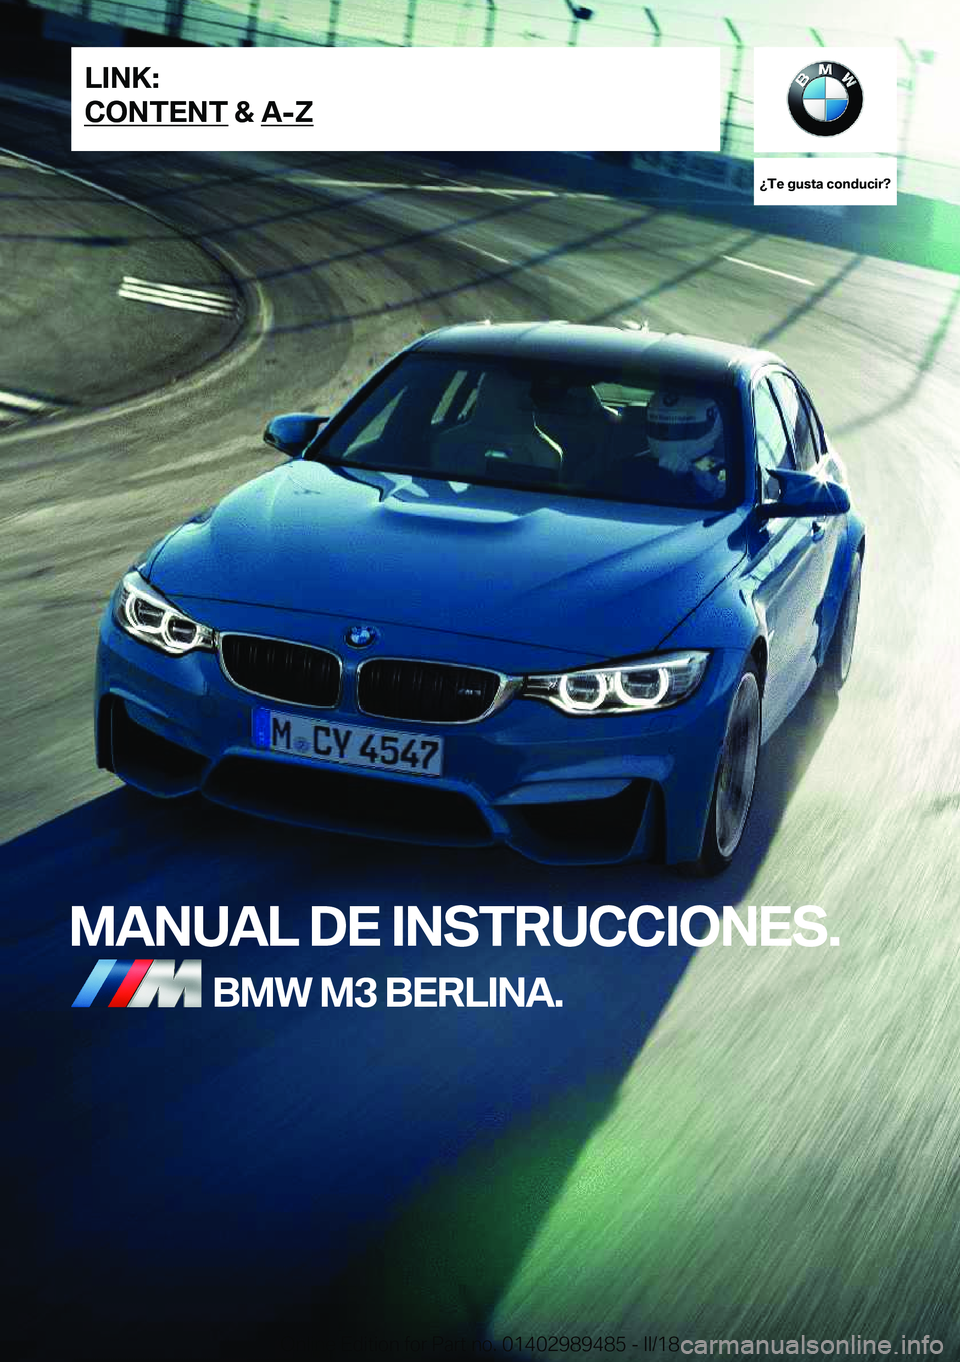 BMW M3 2018  Manuales de Empleo (in Spanish) ��T�e��g�u�s�t�a��c�o�n�d�u�c�i�r� 
�M�A�N�U�A�L��D�E��I�N�S�T�R�U�C�C�I�O�N�E�S�.�B�M�W��M�3��B�E�R�L�I�N�A�.�L�I�N�K�:
�C�O�N�T�E�N�T��&��A�-�;�O�n�l�i�n�e� �E�d�i�t�i�o�n� �f�o�r� �P�a�r�t